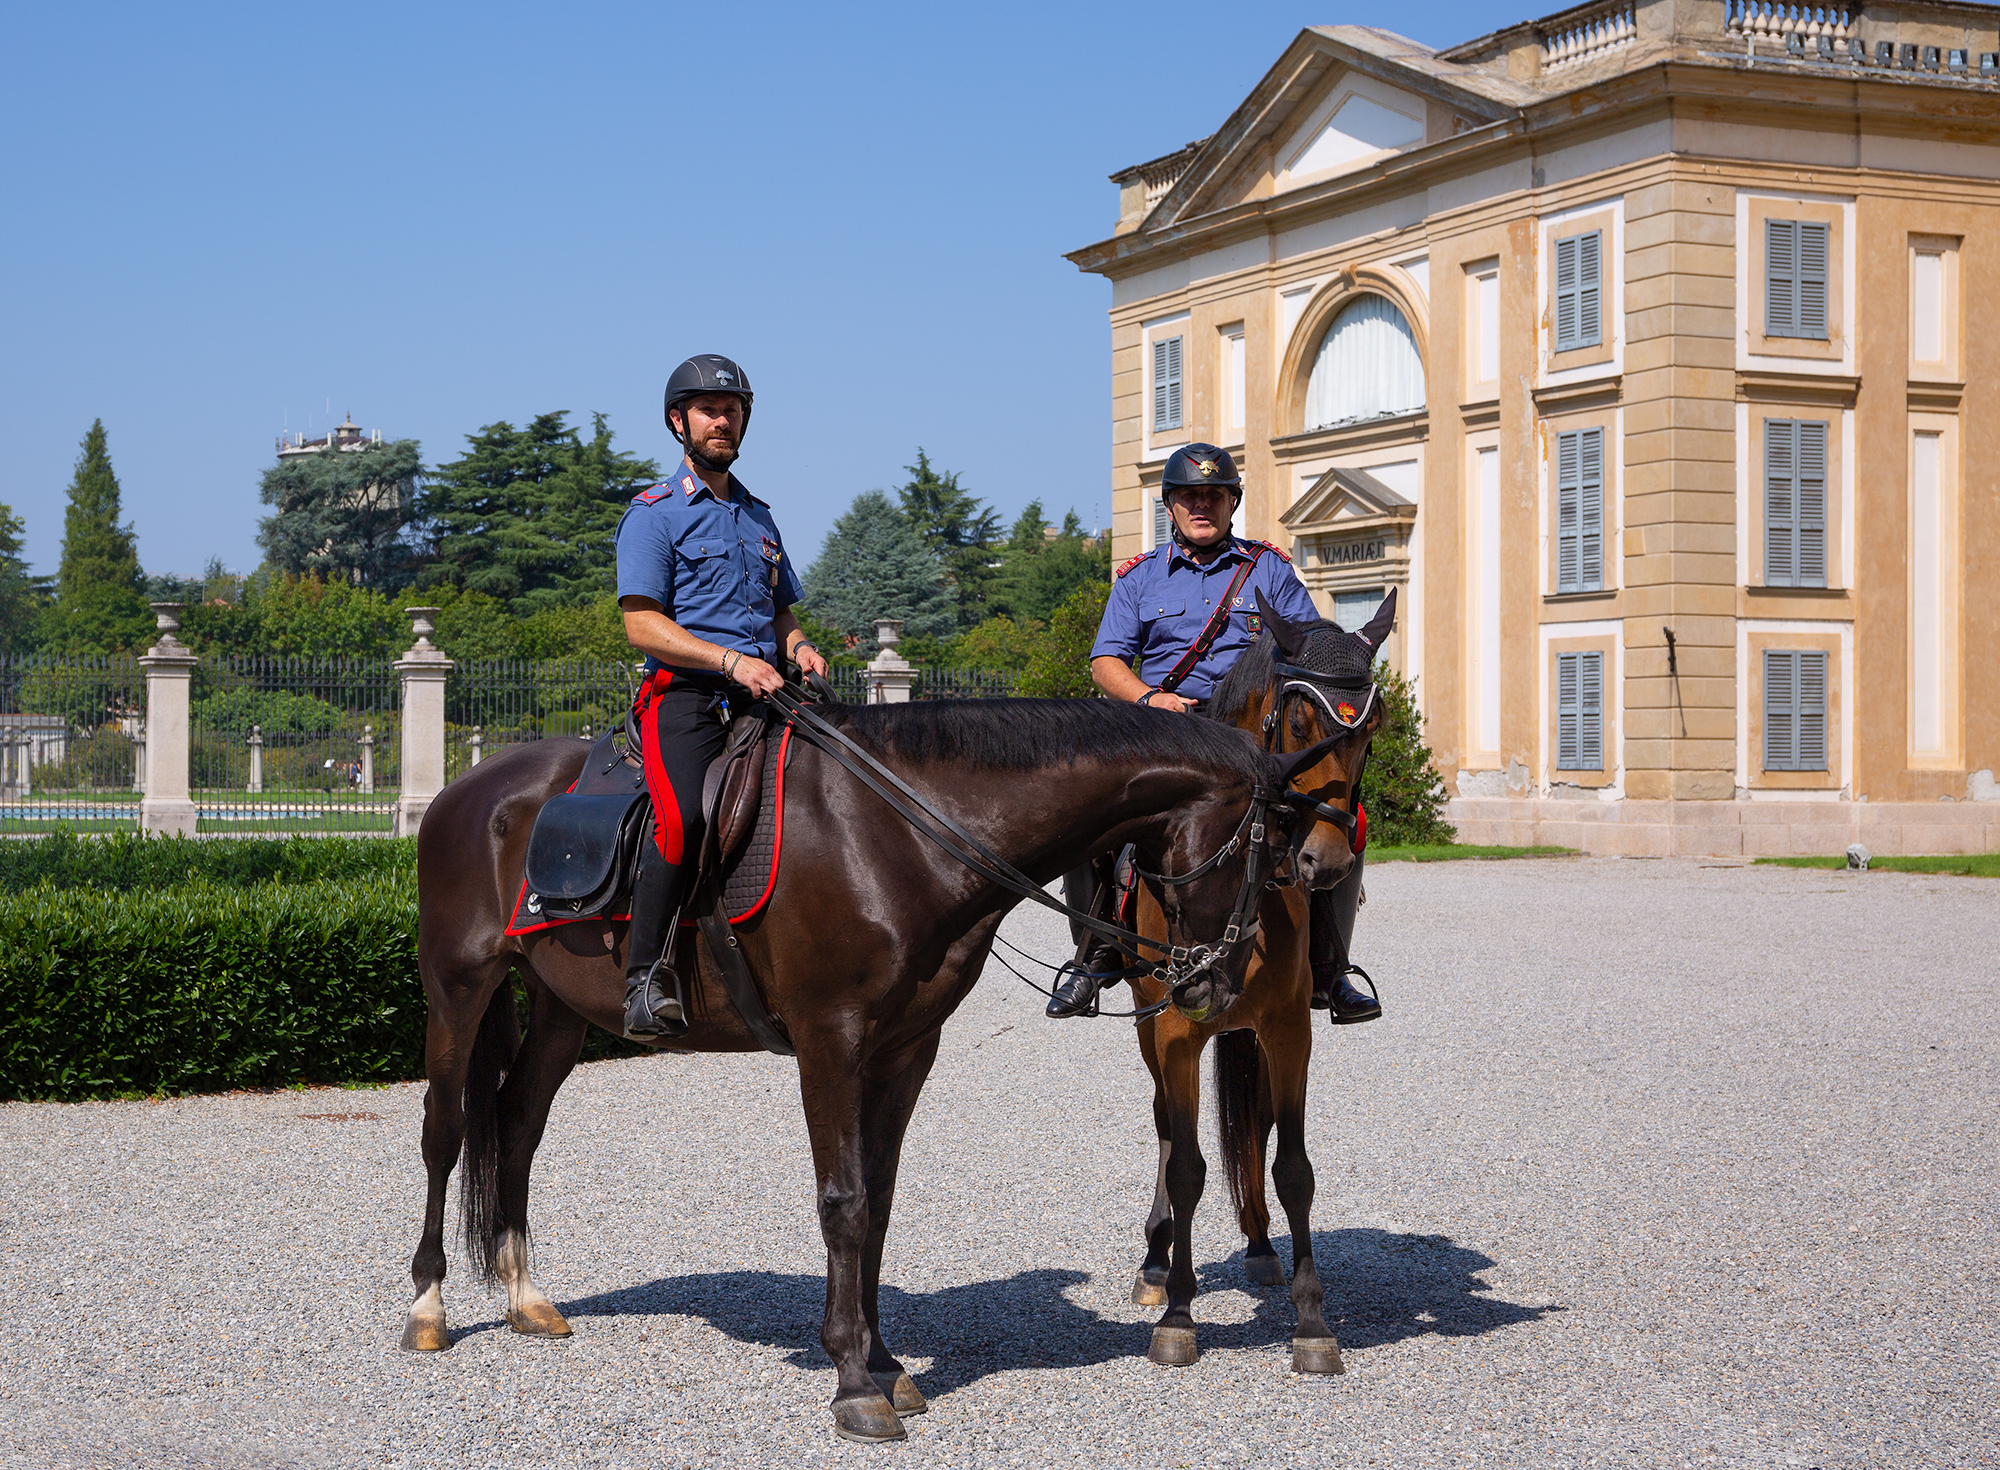 Carabinieri on horseback...